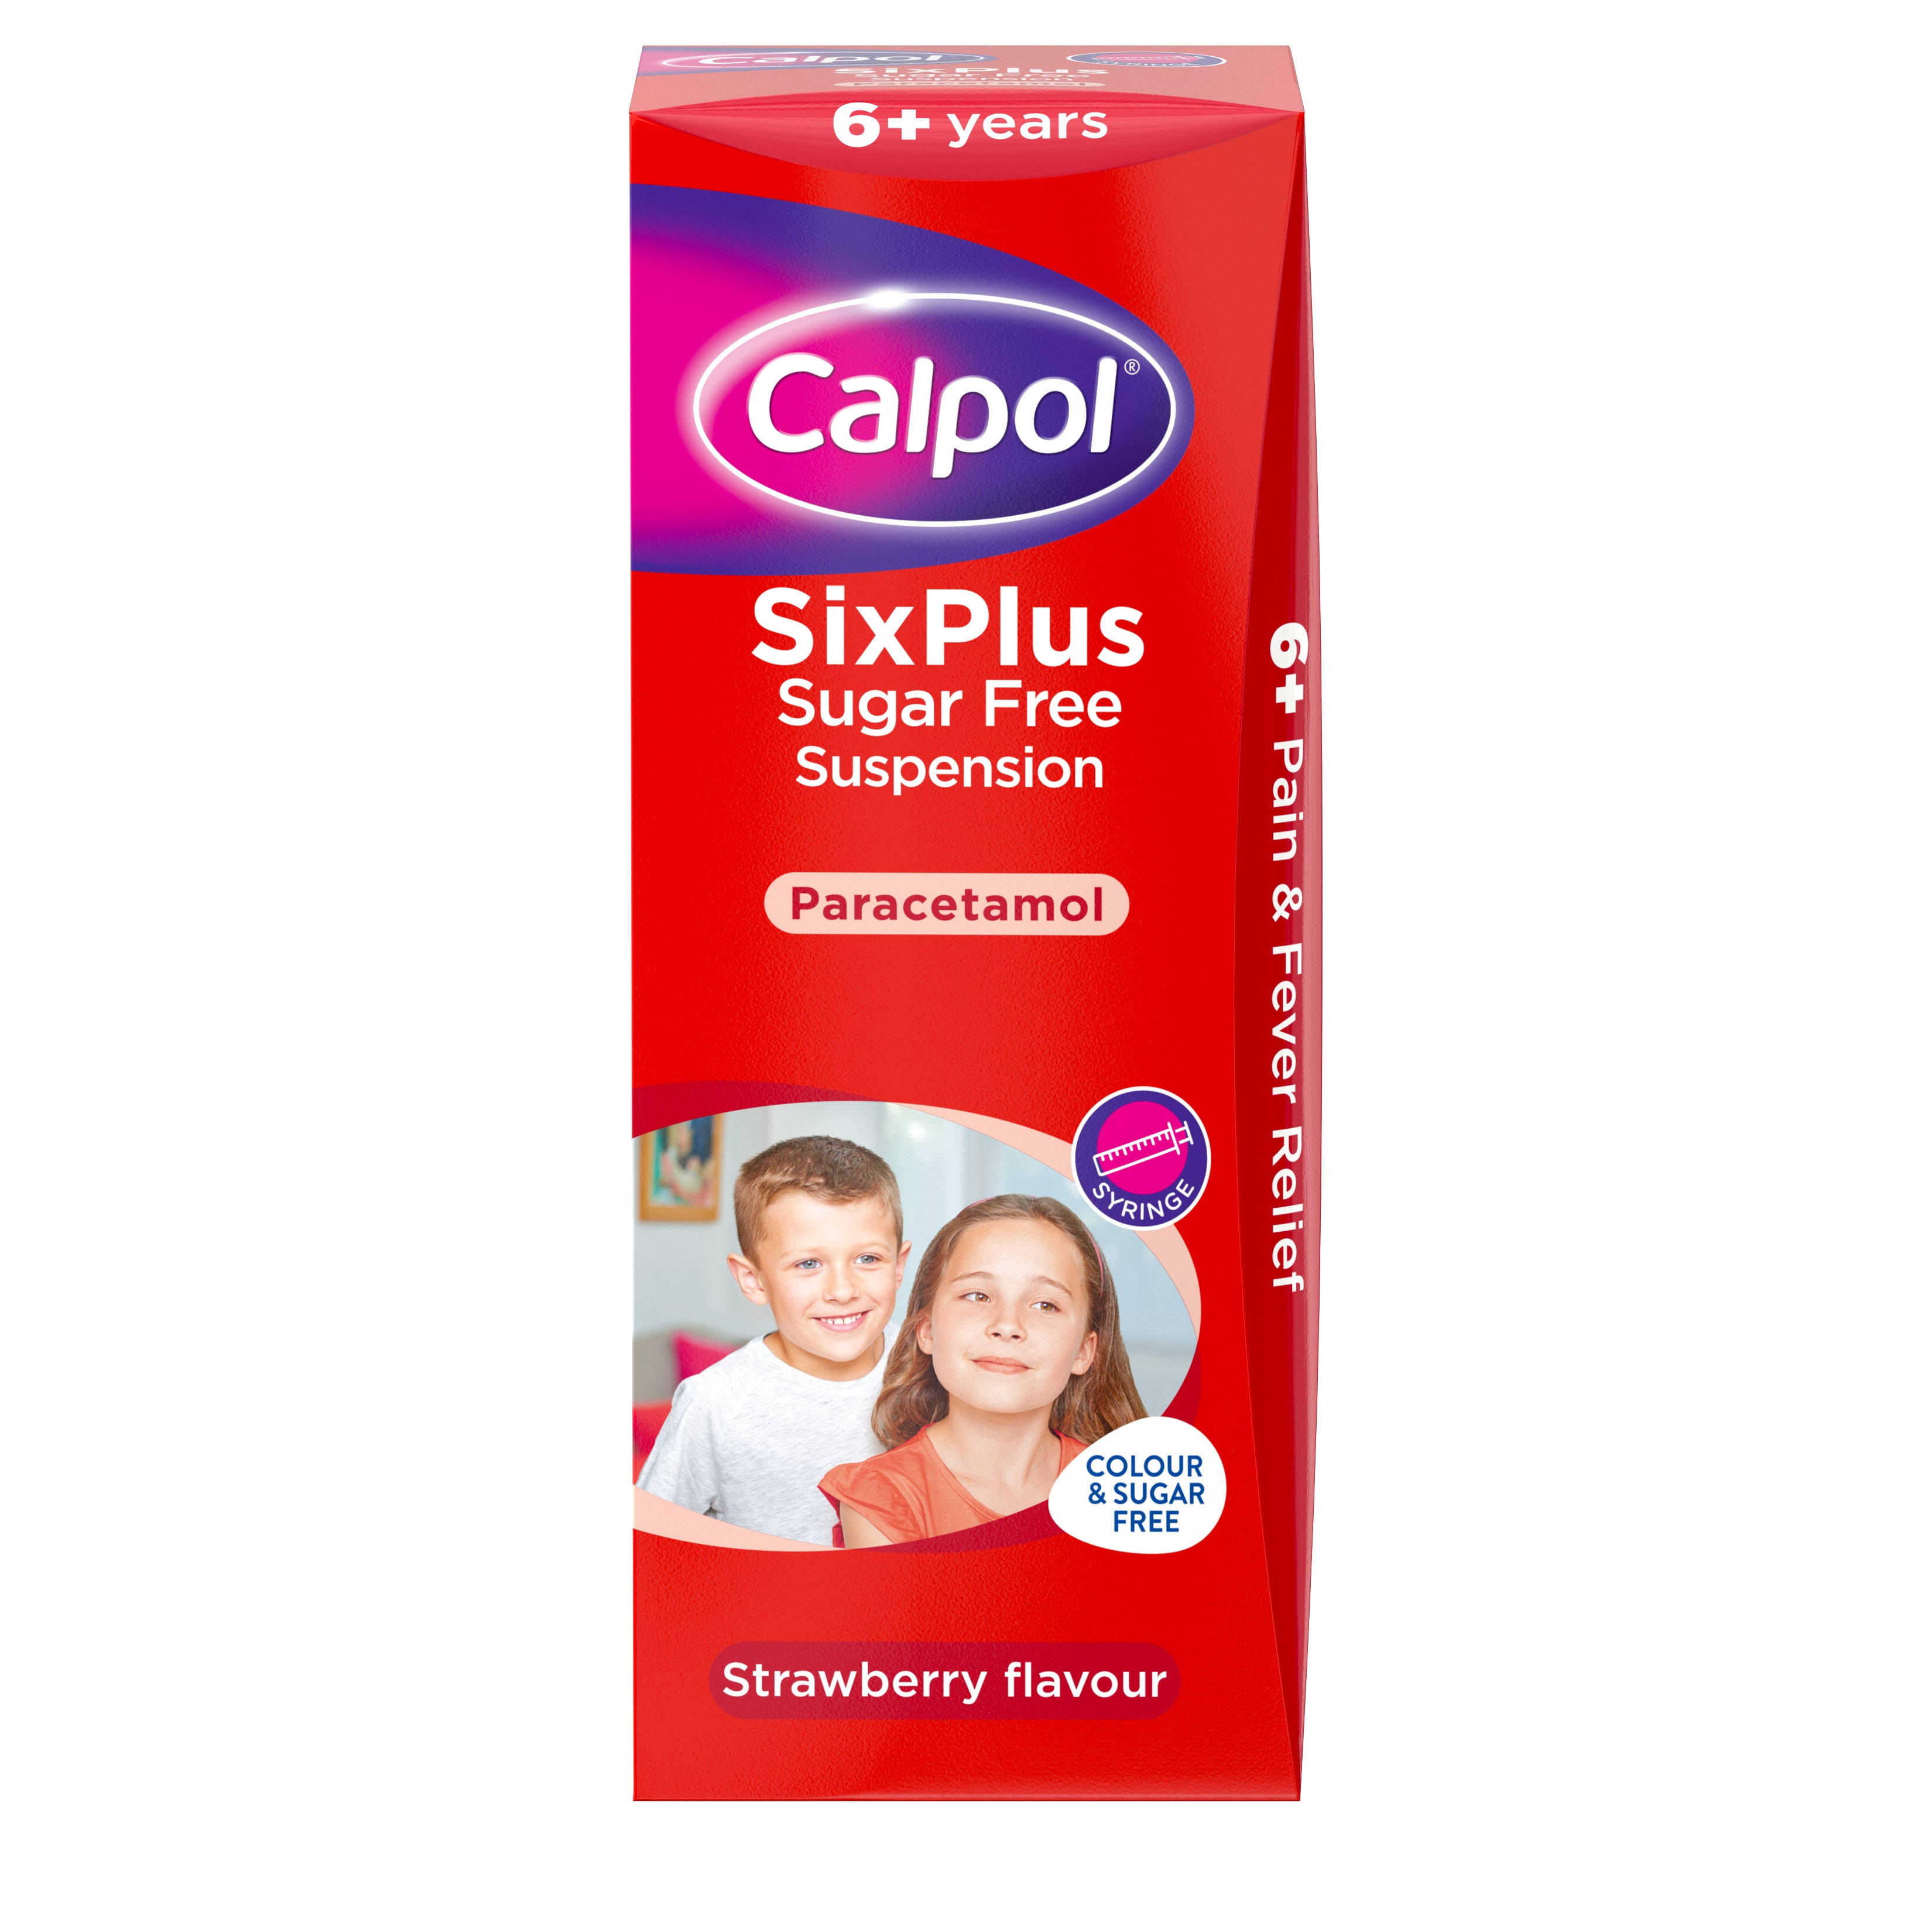 Calpol SixPlus Suspension Sugar Free Paracetamol - Strawberry Flavor, 200ml